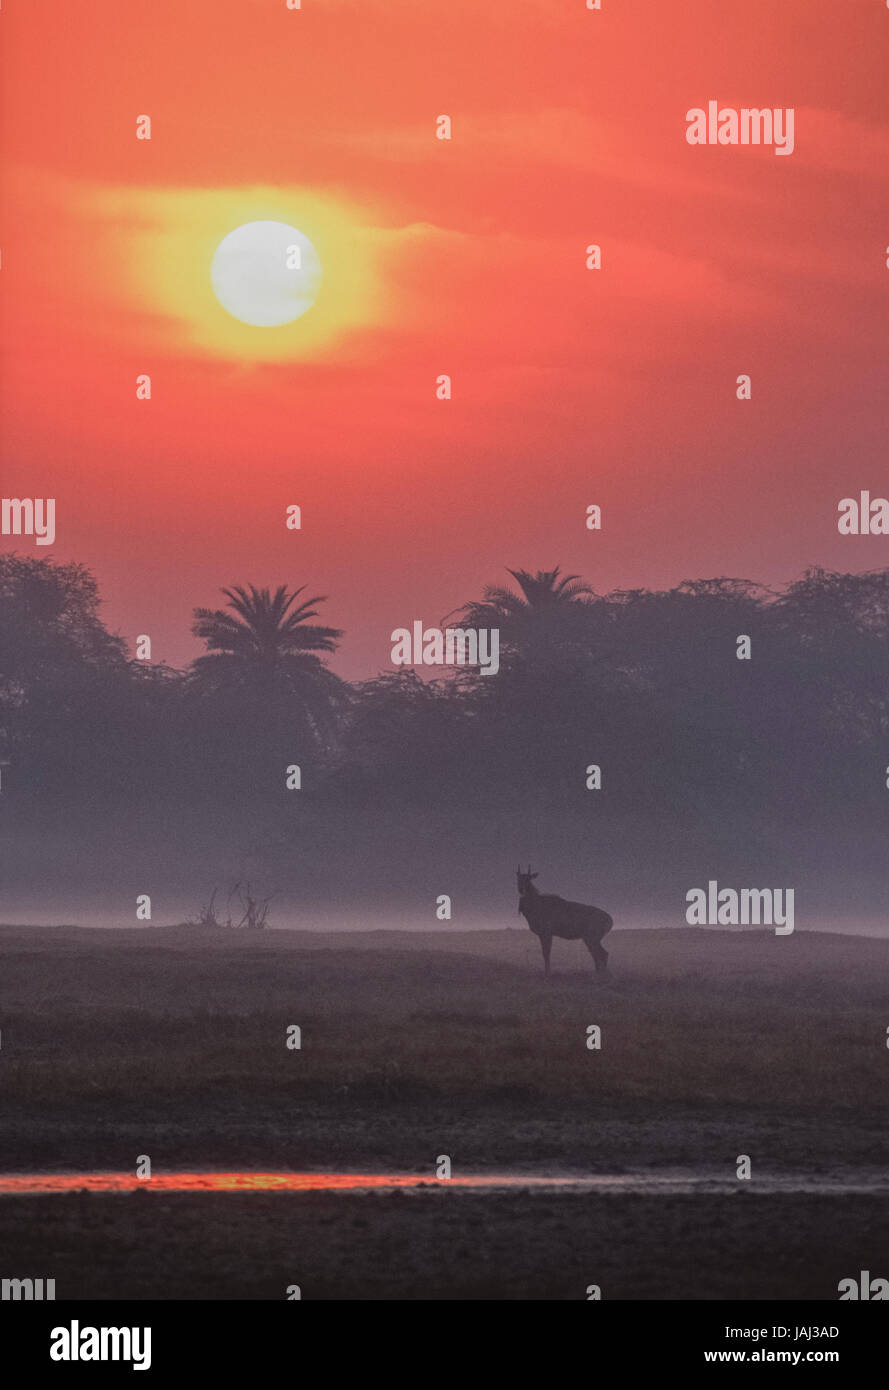 Jackale oder Blue Bull, Boselaphus Tragocamelus Keoladeo, silhouettiert im Nebel bei Sonnenaufgang, Keoladeo Ghana Nationalpark, Bharatpur, Rajasthan, Indien Stockfoto